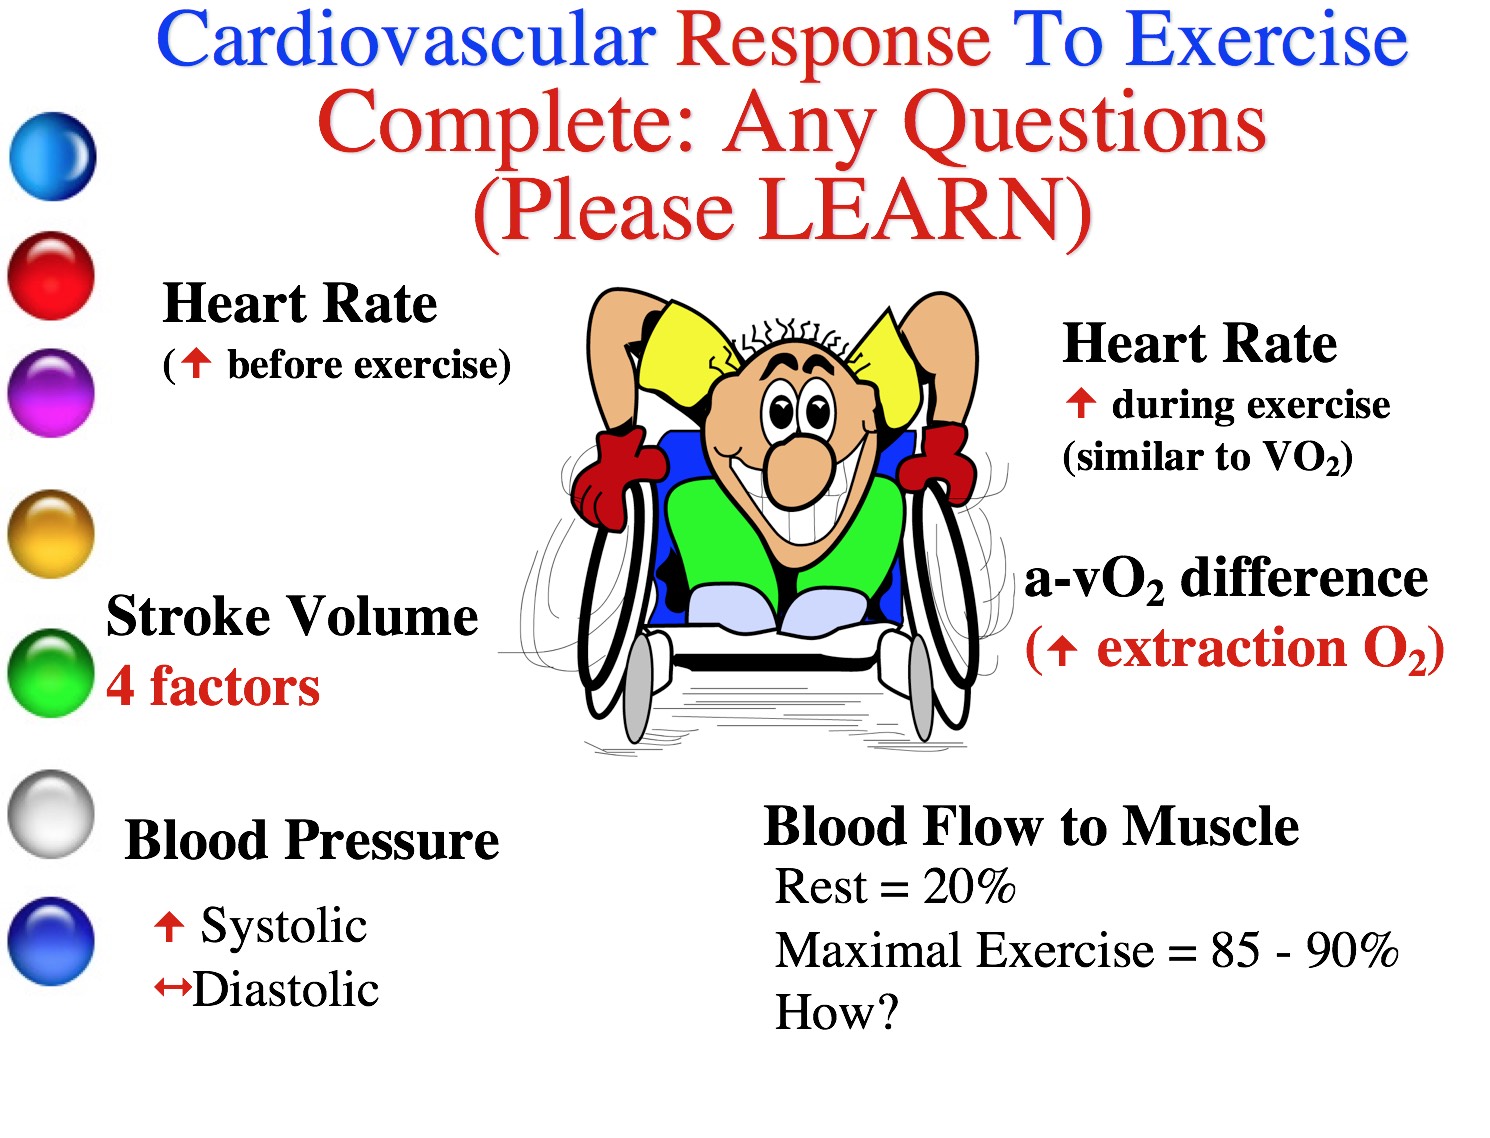 Cardiovascular training adaptations